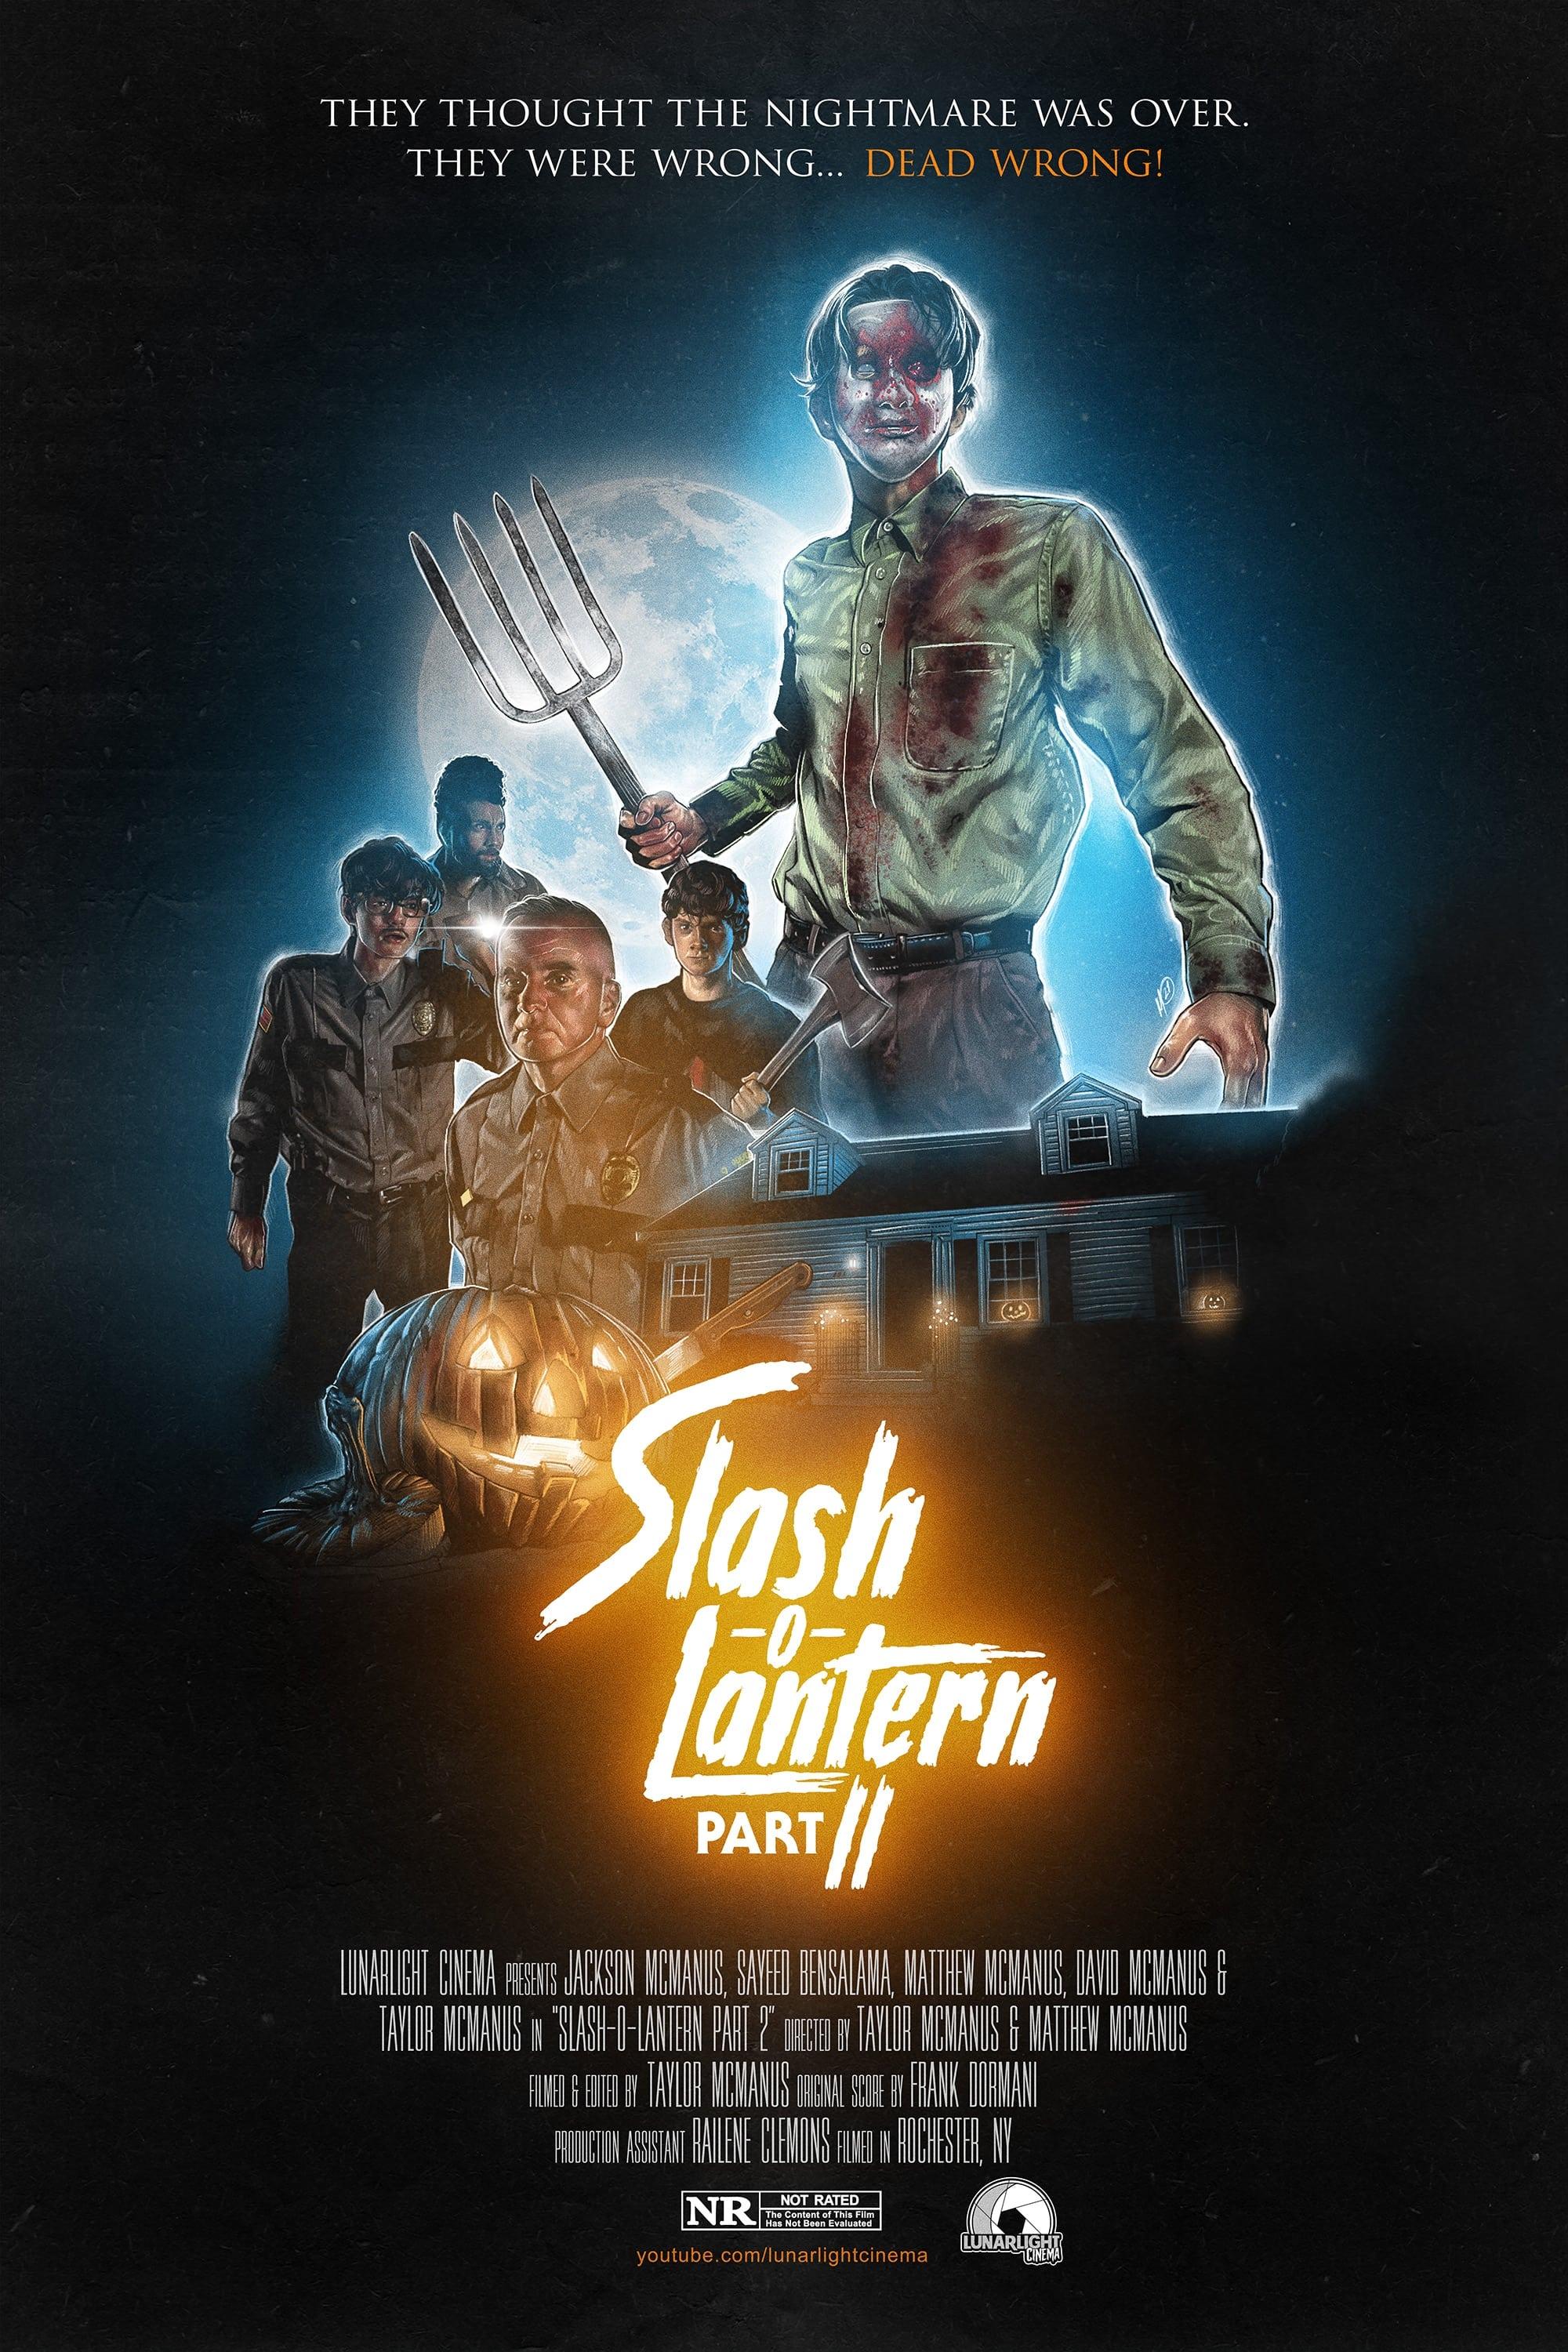 Slash-O-Lantern Part II poster